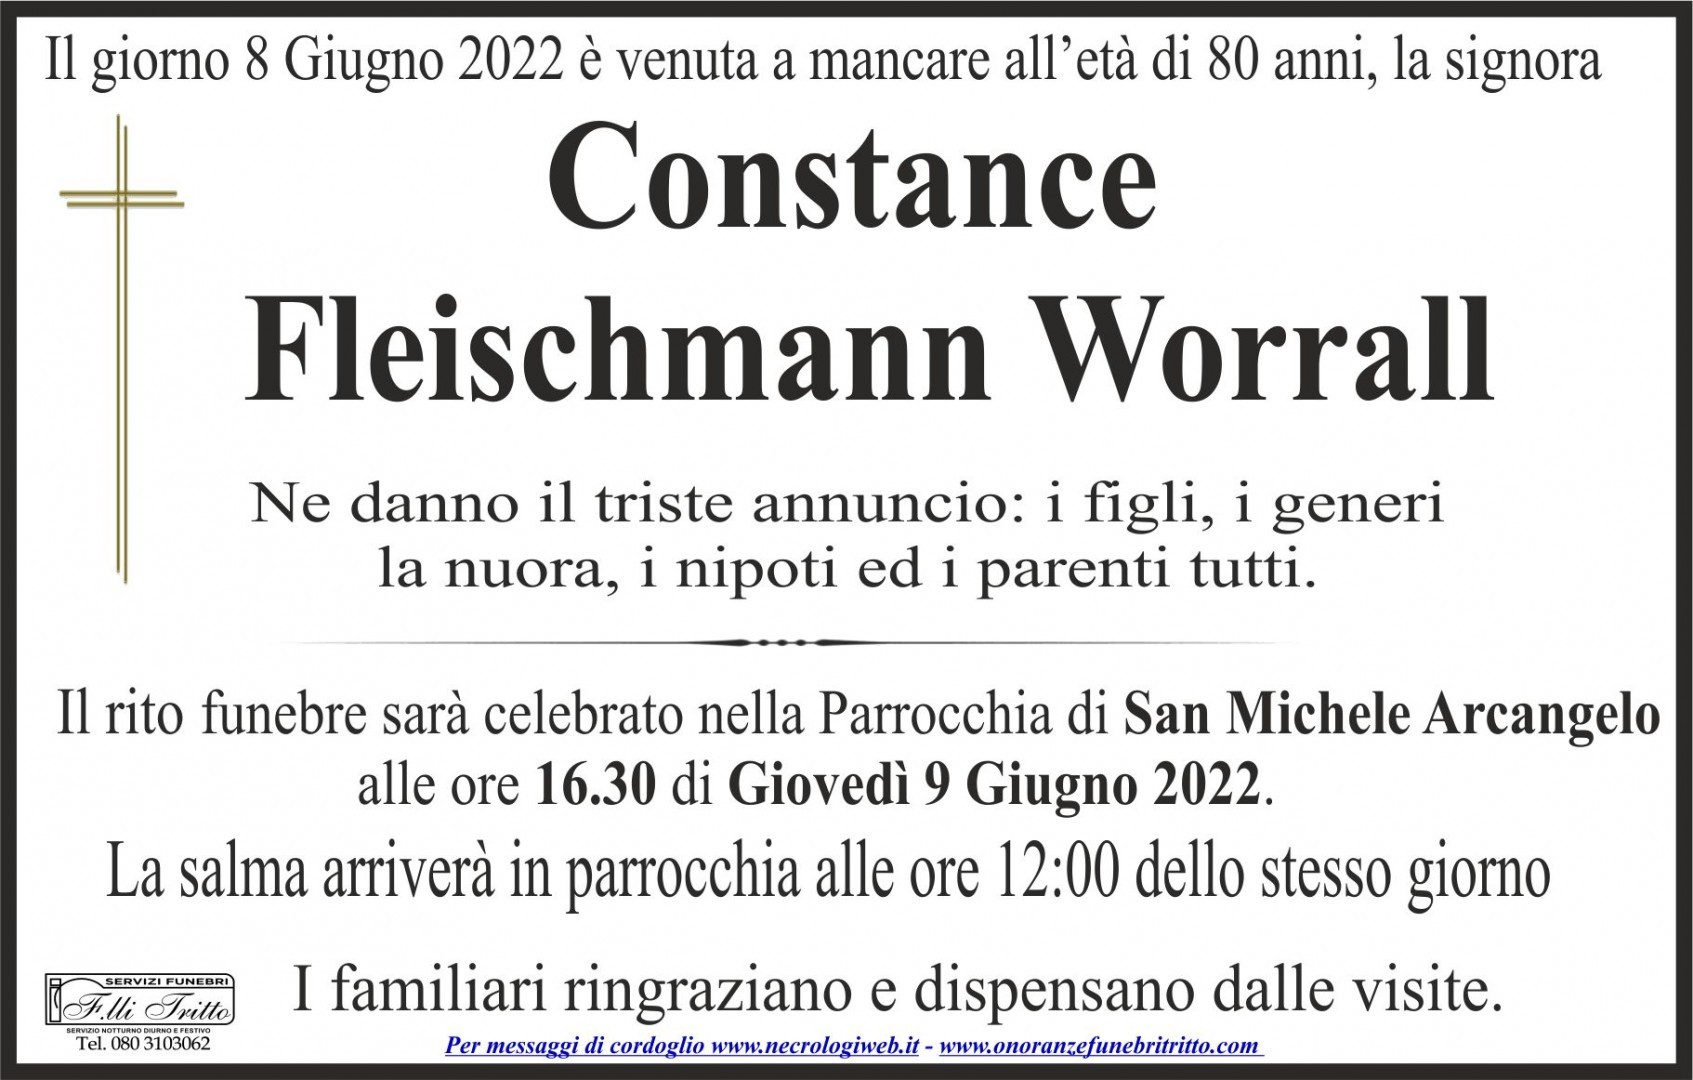 Costance Fleischmann Worrall